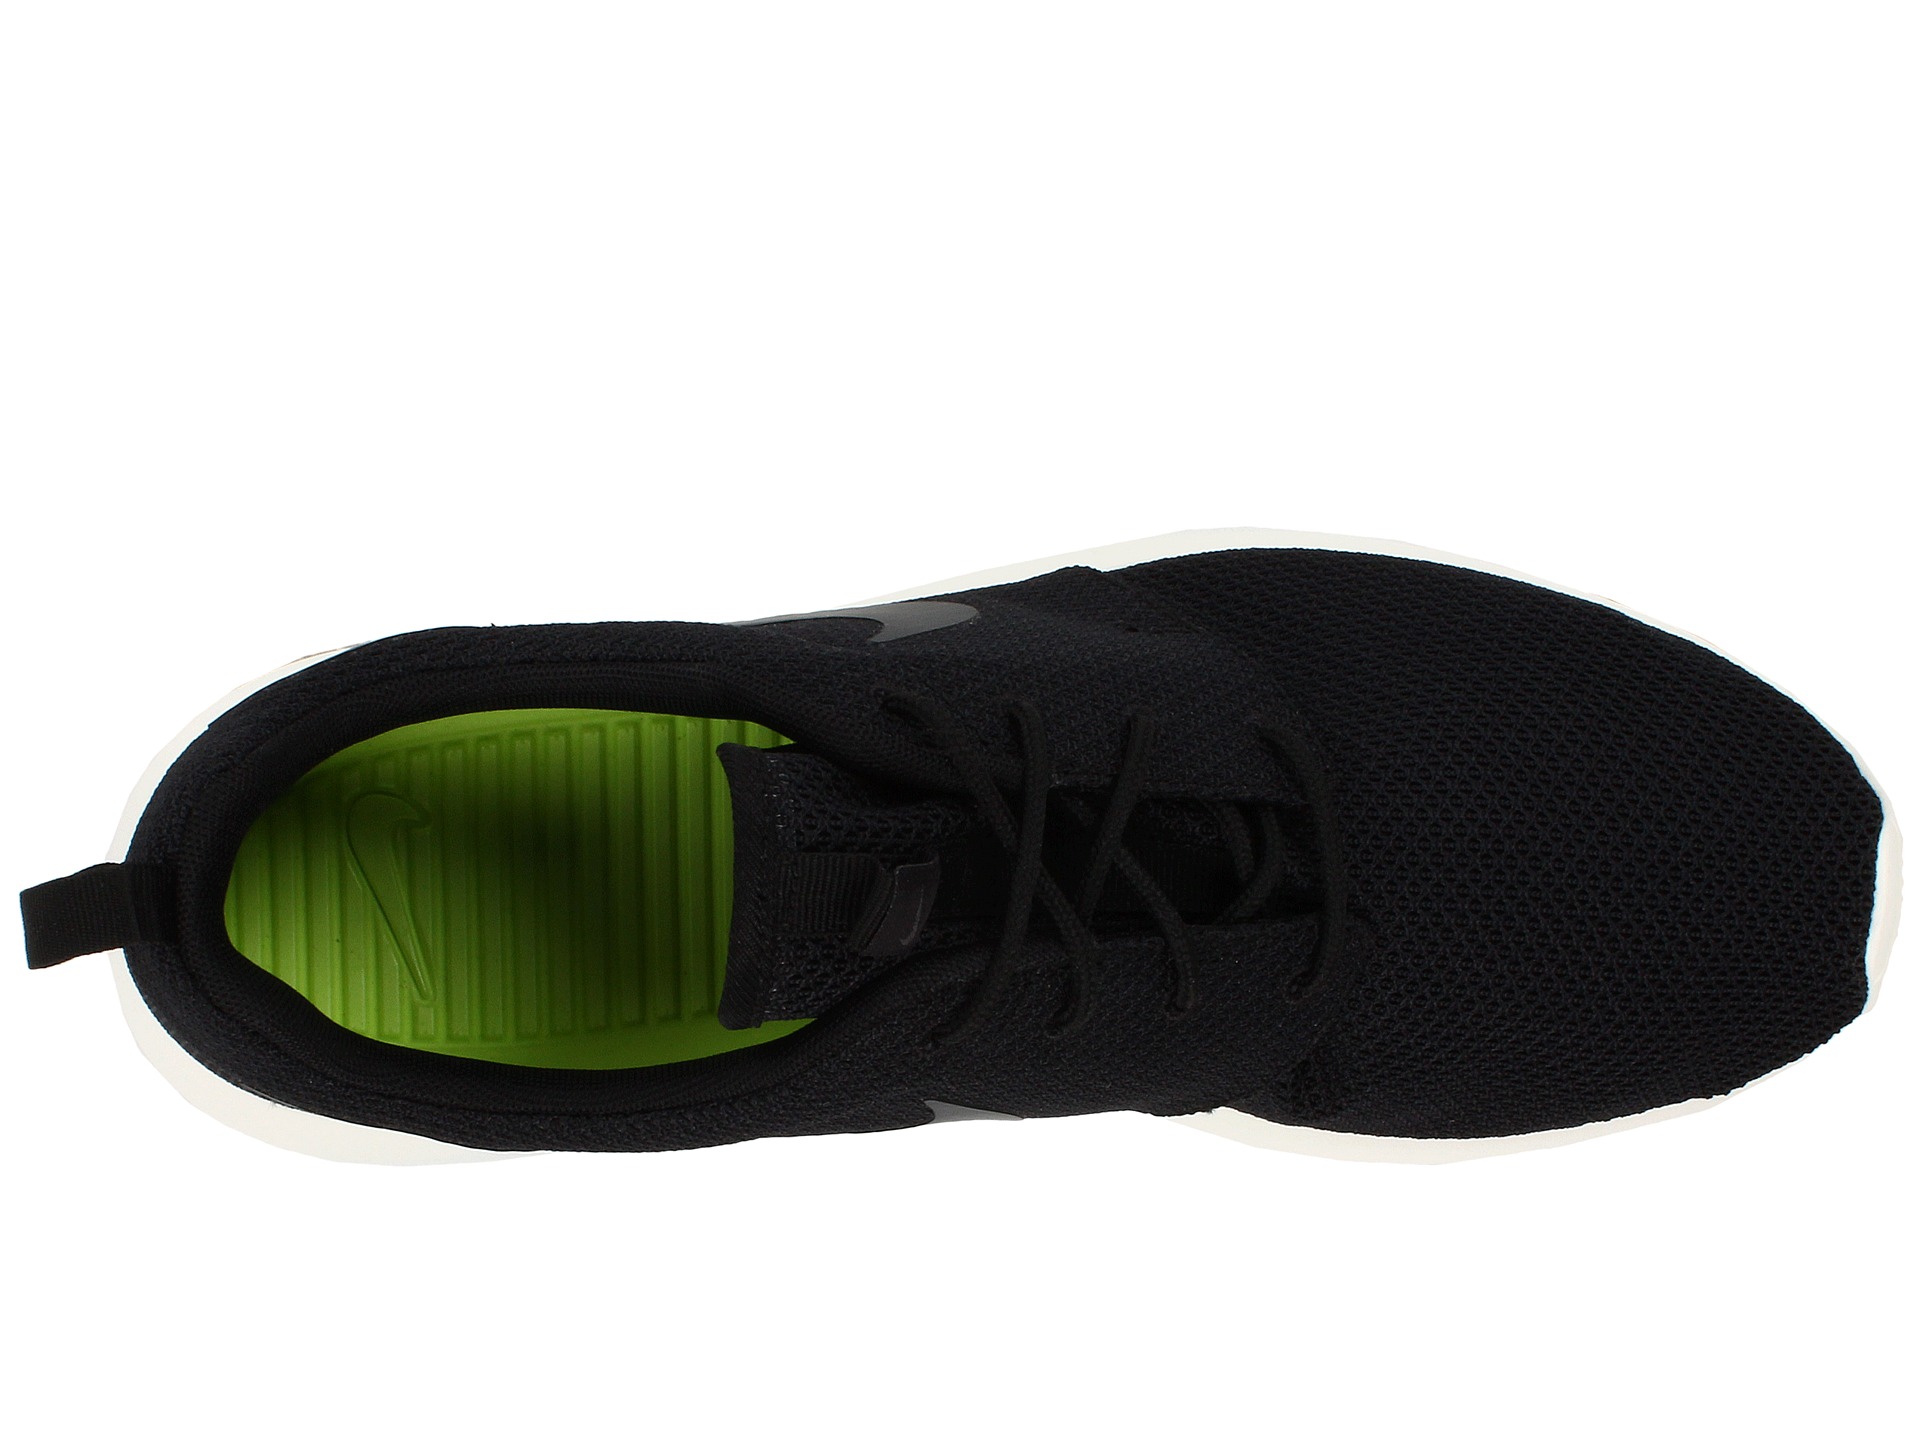 Nike Roshe Run BlackSailAnthracite - Zappos Free Shipping BOTH ...